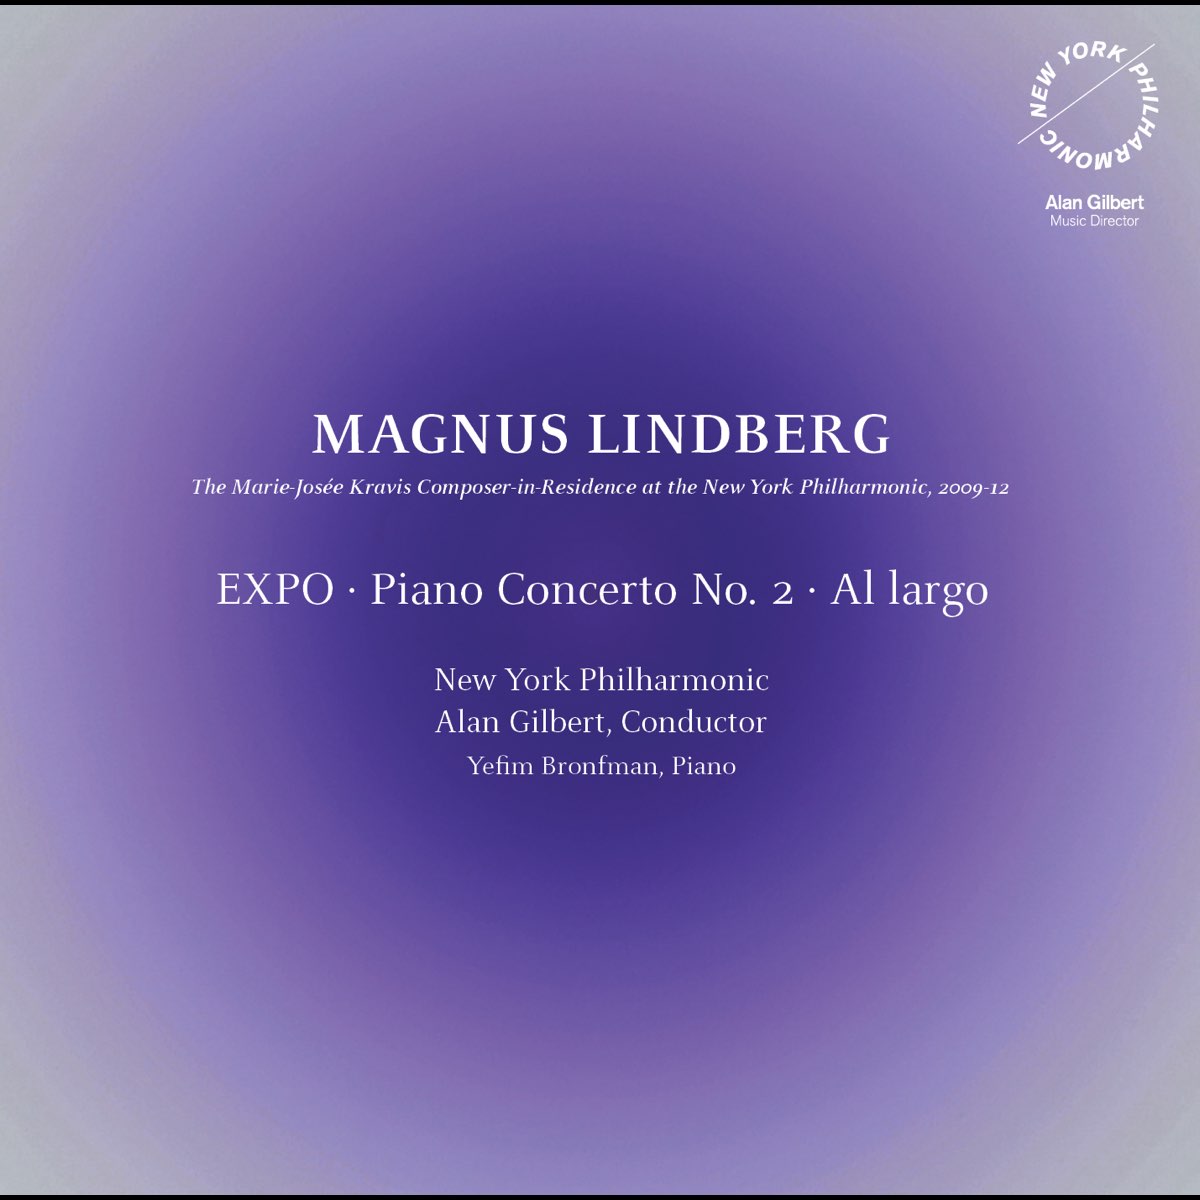 Lindberg: EXPO - Piano Concerto No. 2 - Al largo - Album by Alan Gilbert,  New York Philharmonic & Yefim Bronfman - Apple Music